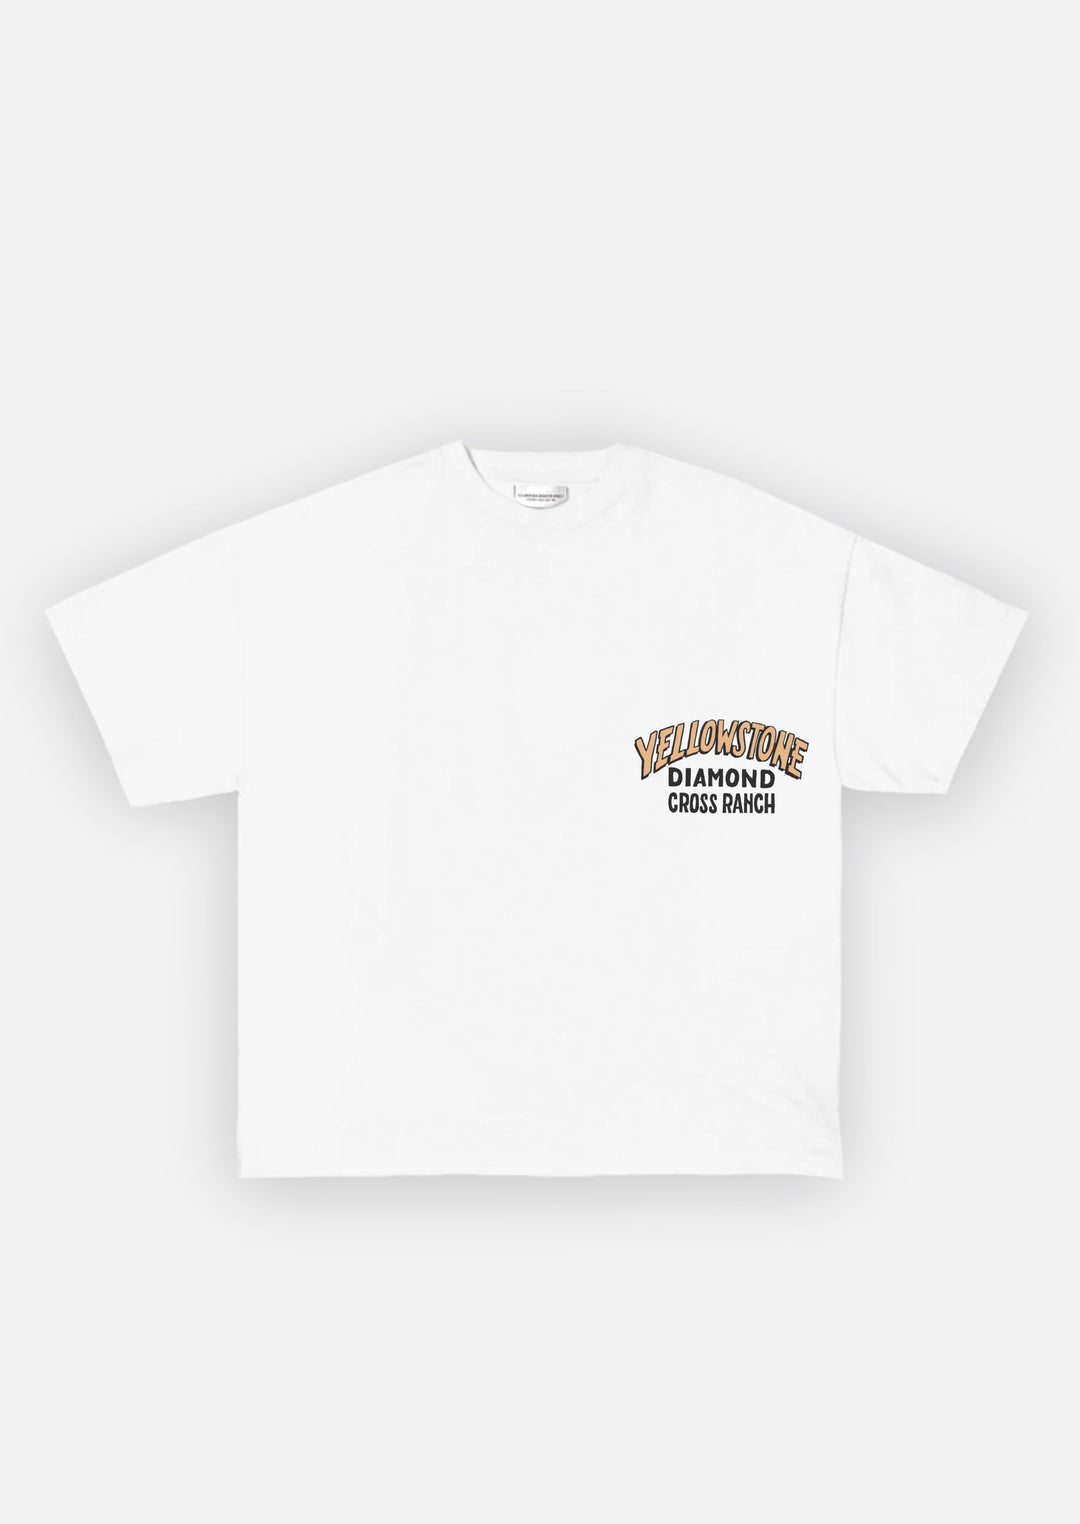 Diamond Cross Ranch Yellowstone White T-Shirt 